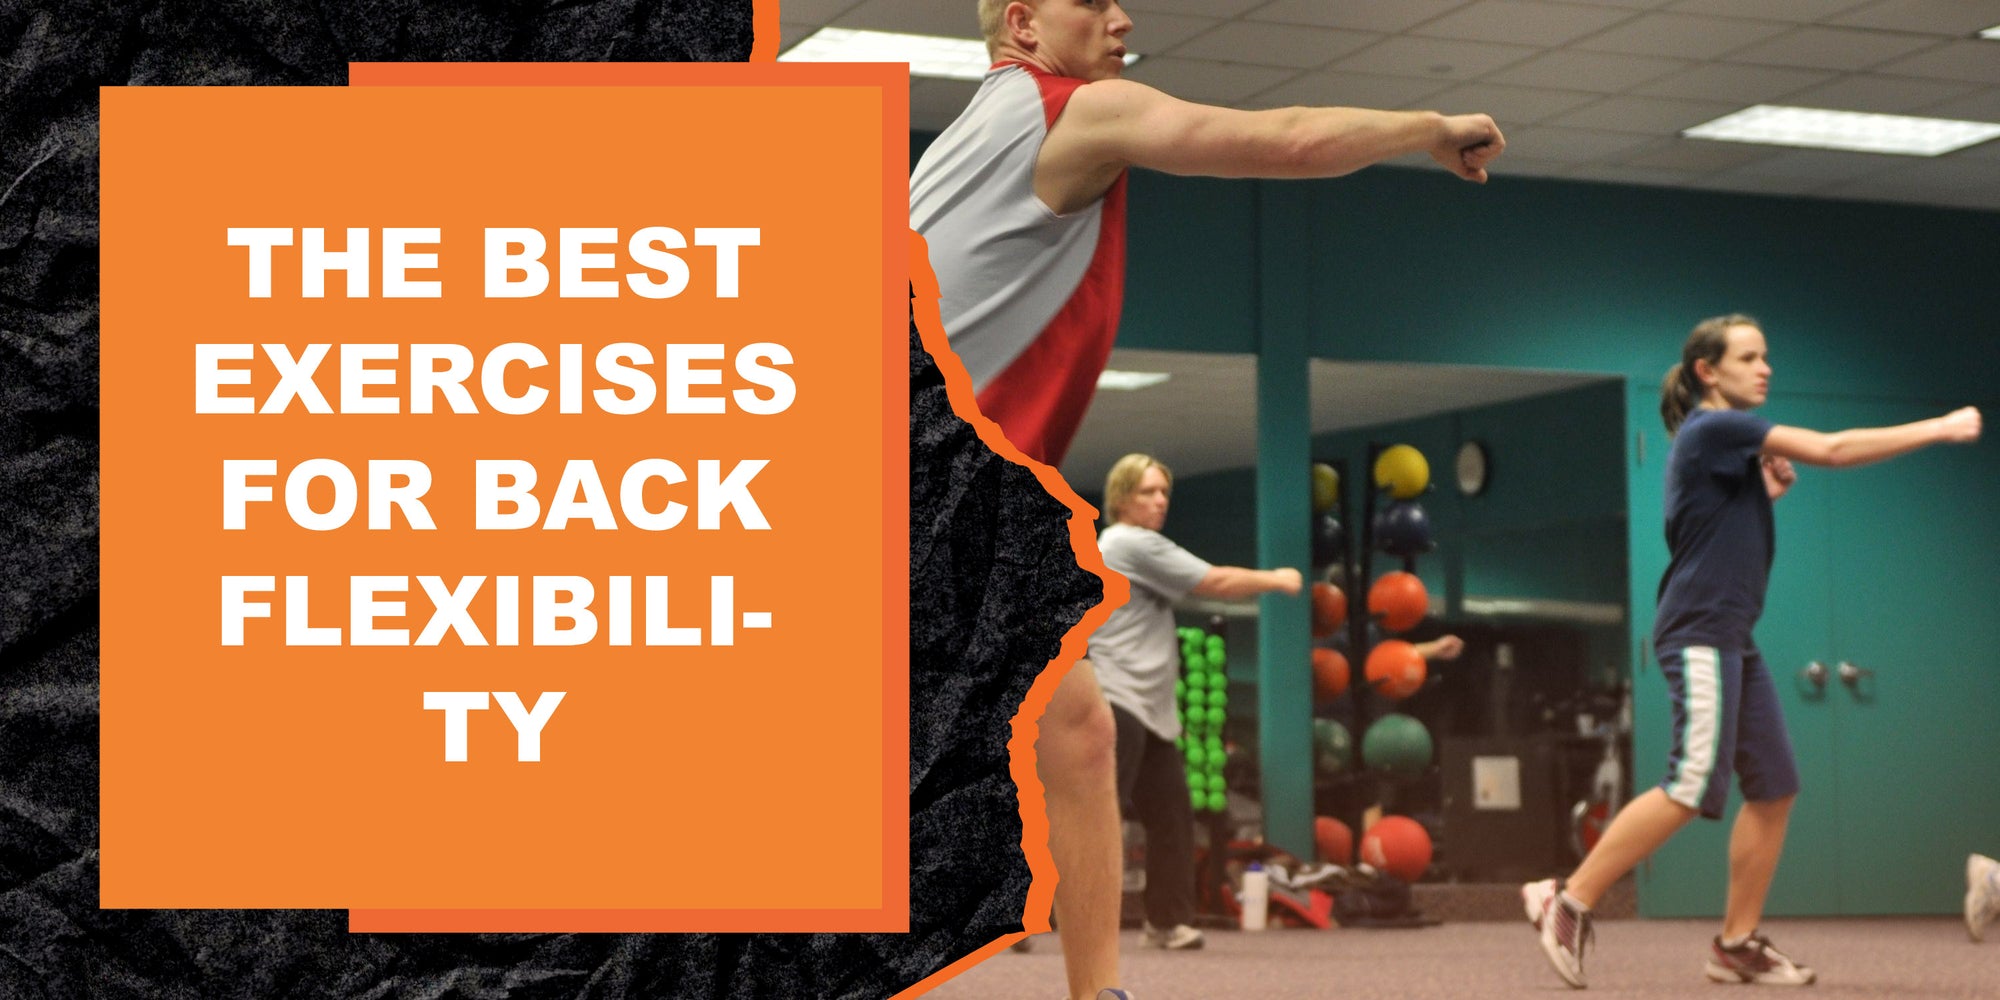 The Best Exercises for Back Flexibility